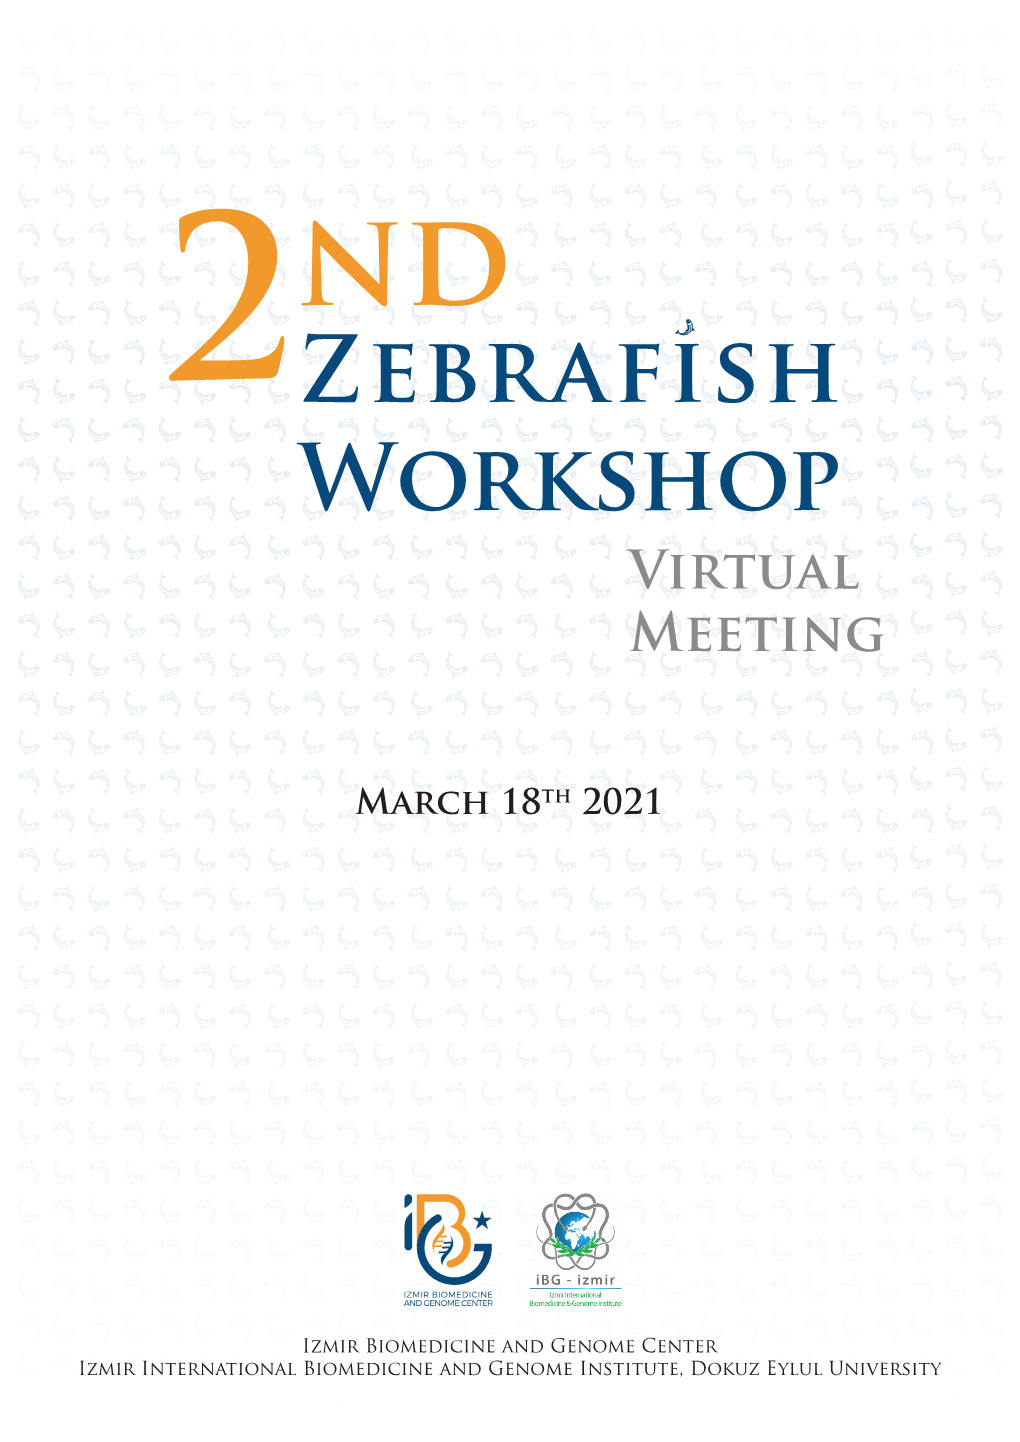 Zebrafish Workshop Virtual Meeting